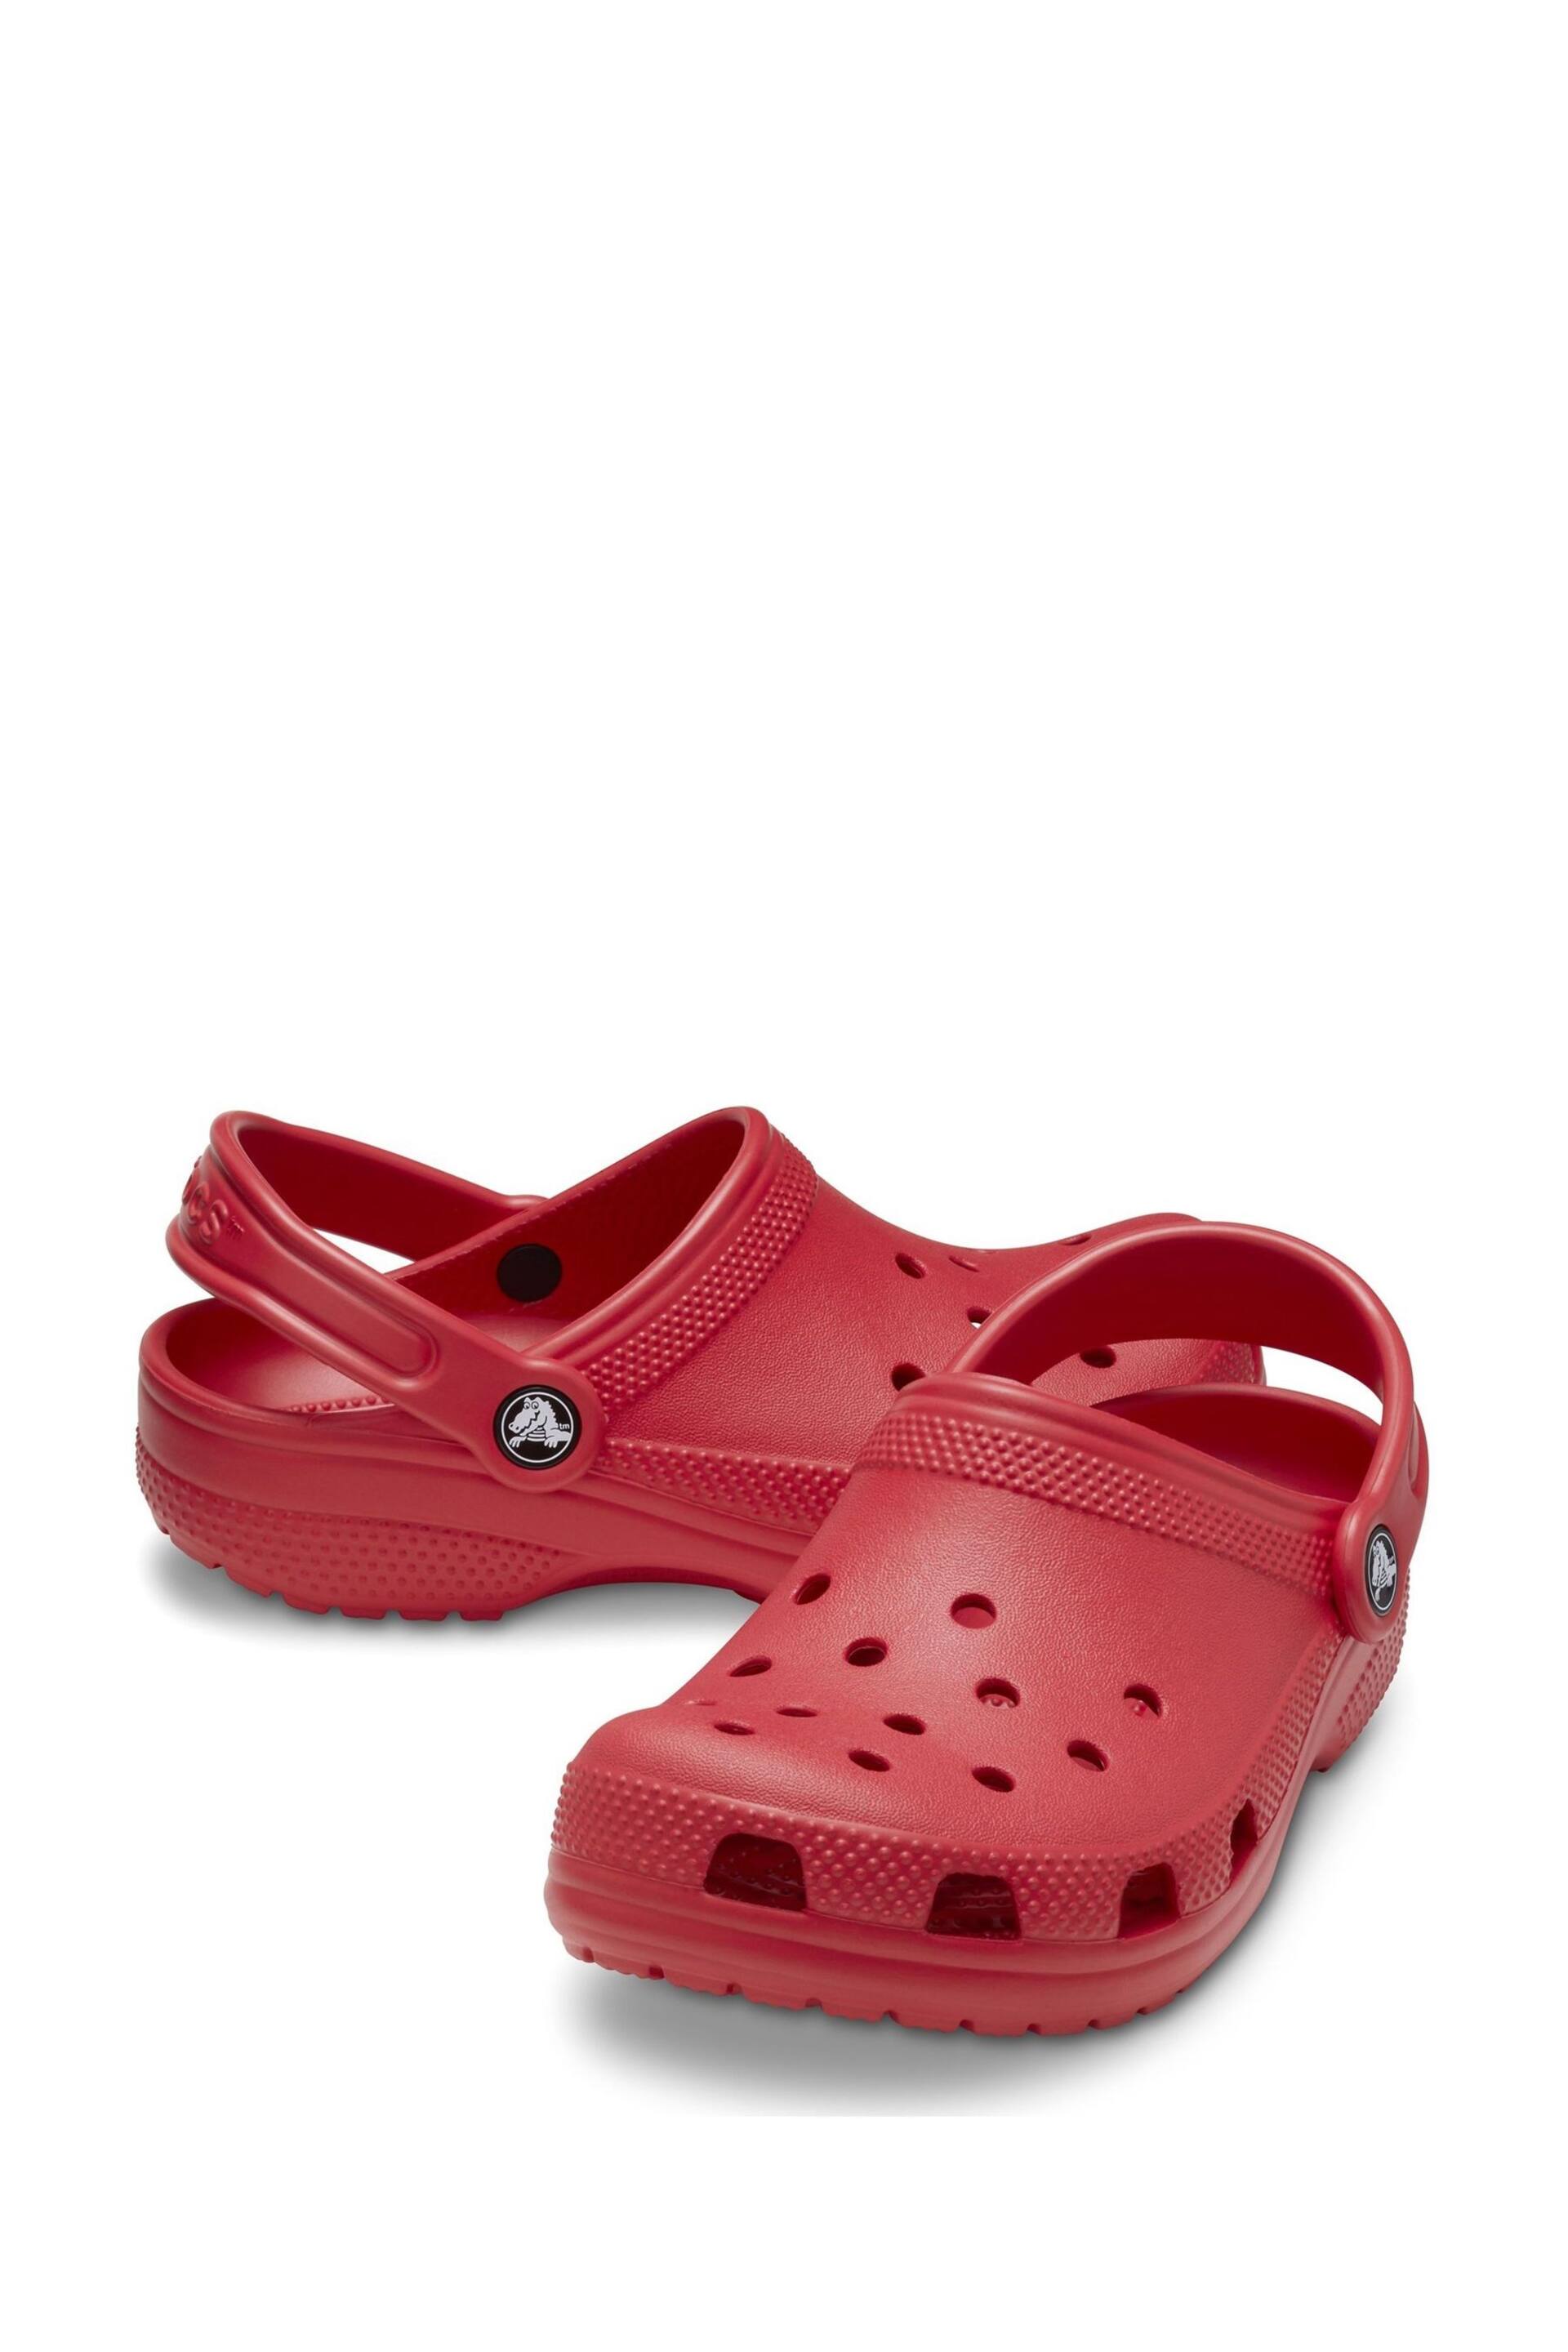 Crocs Classic Toddler Unisex Clogs - Image 3 of 5